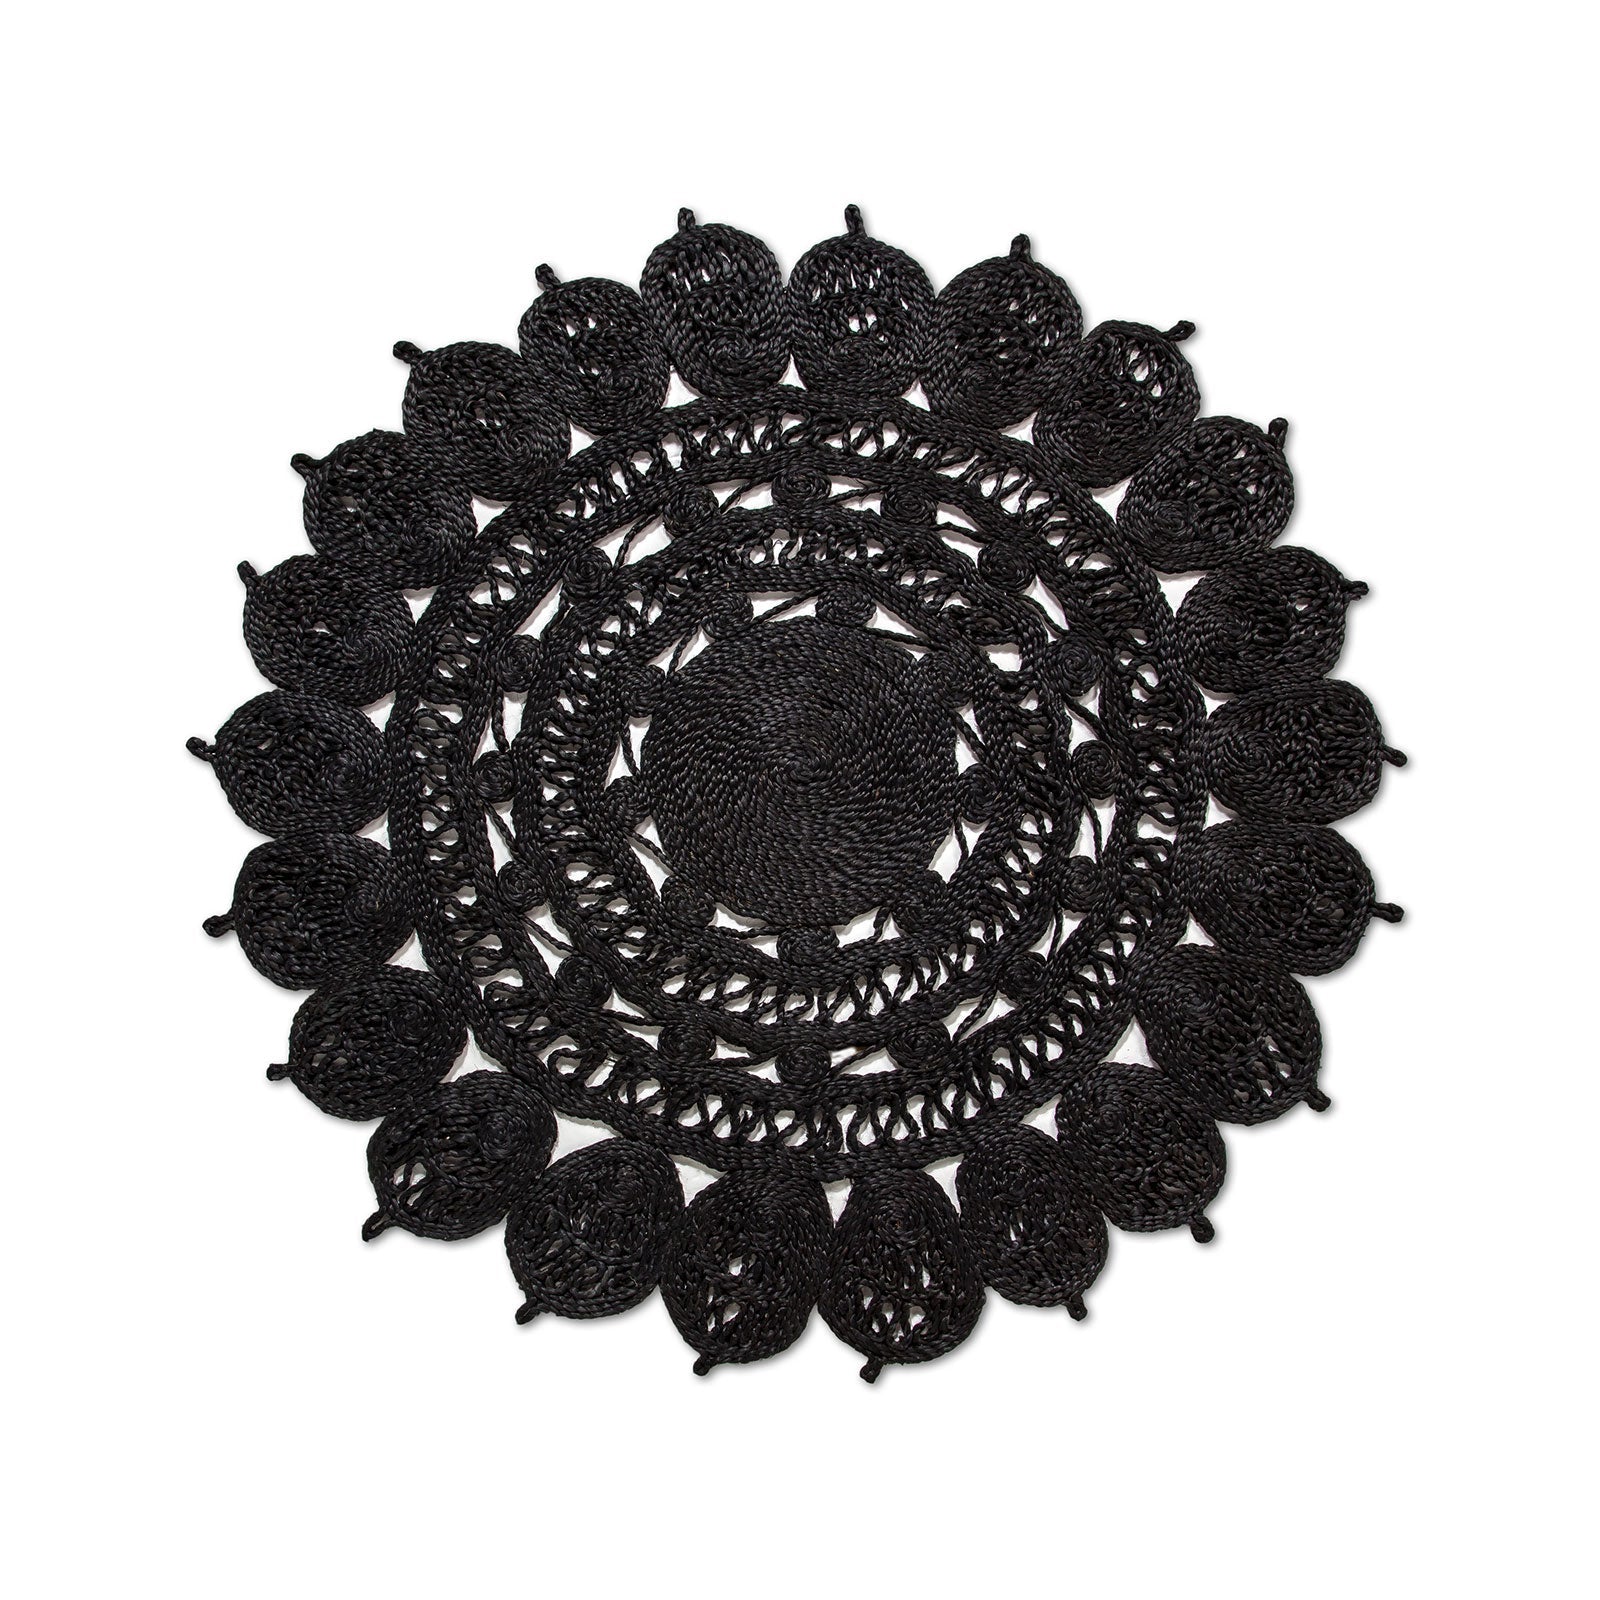 Dandelion 9ft Round Rug – Black